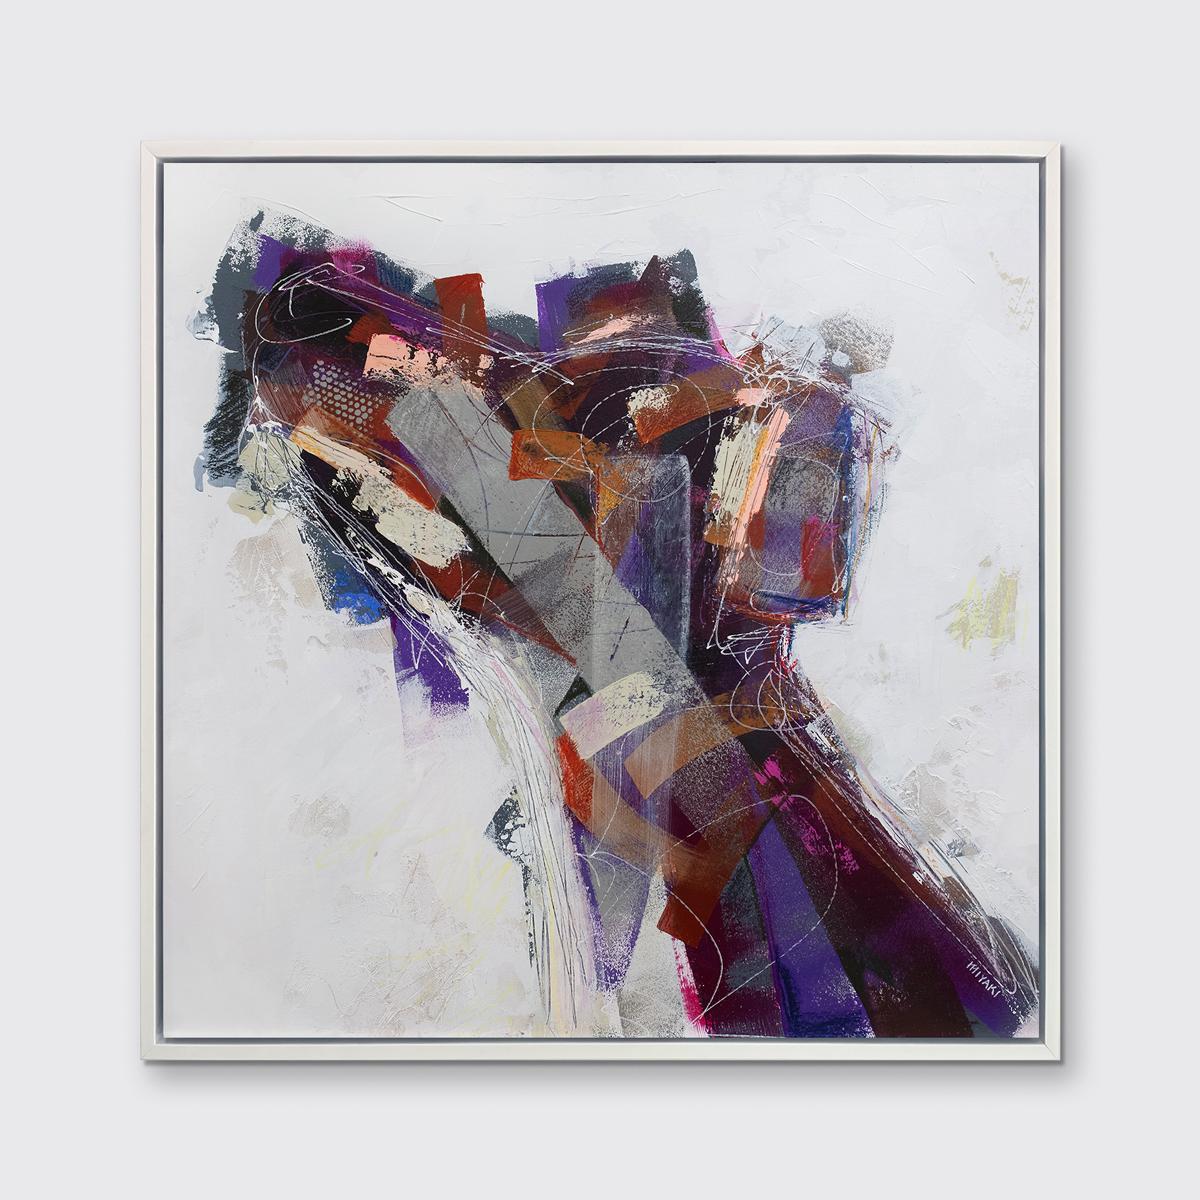 « Colorful Basenji » Impression giclée en édition limitée, 30